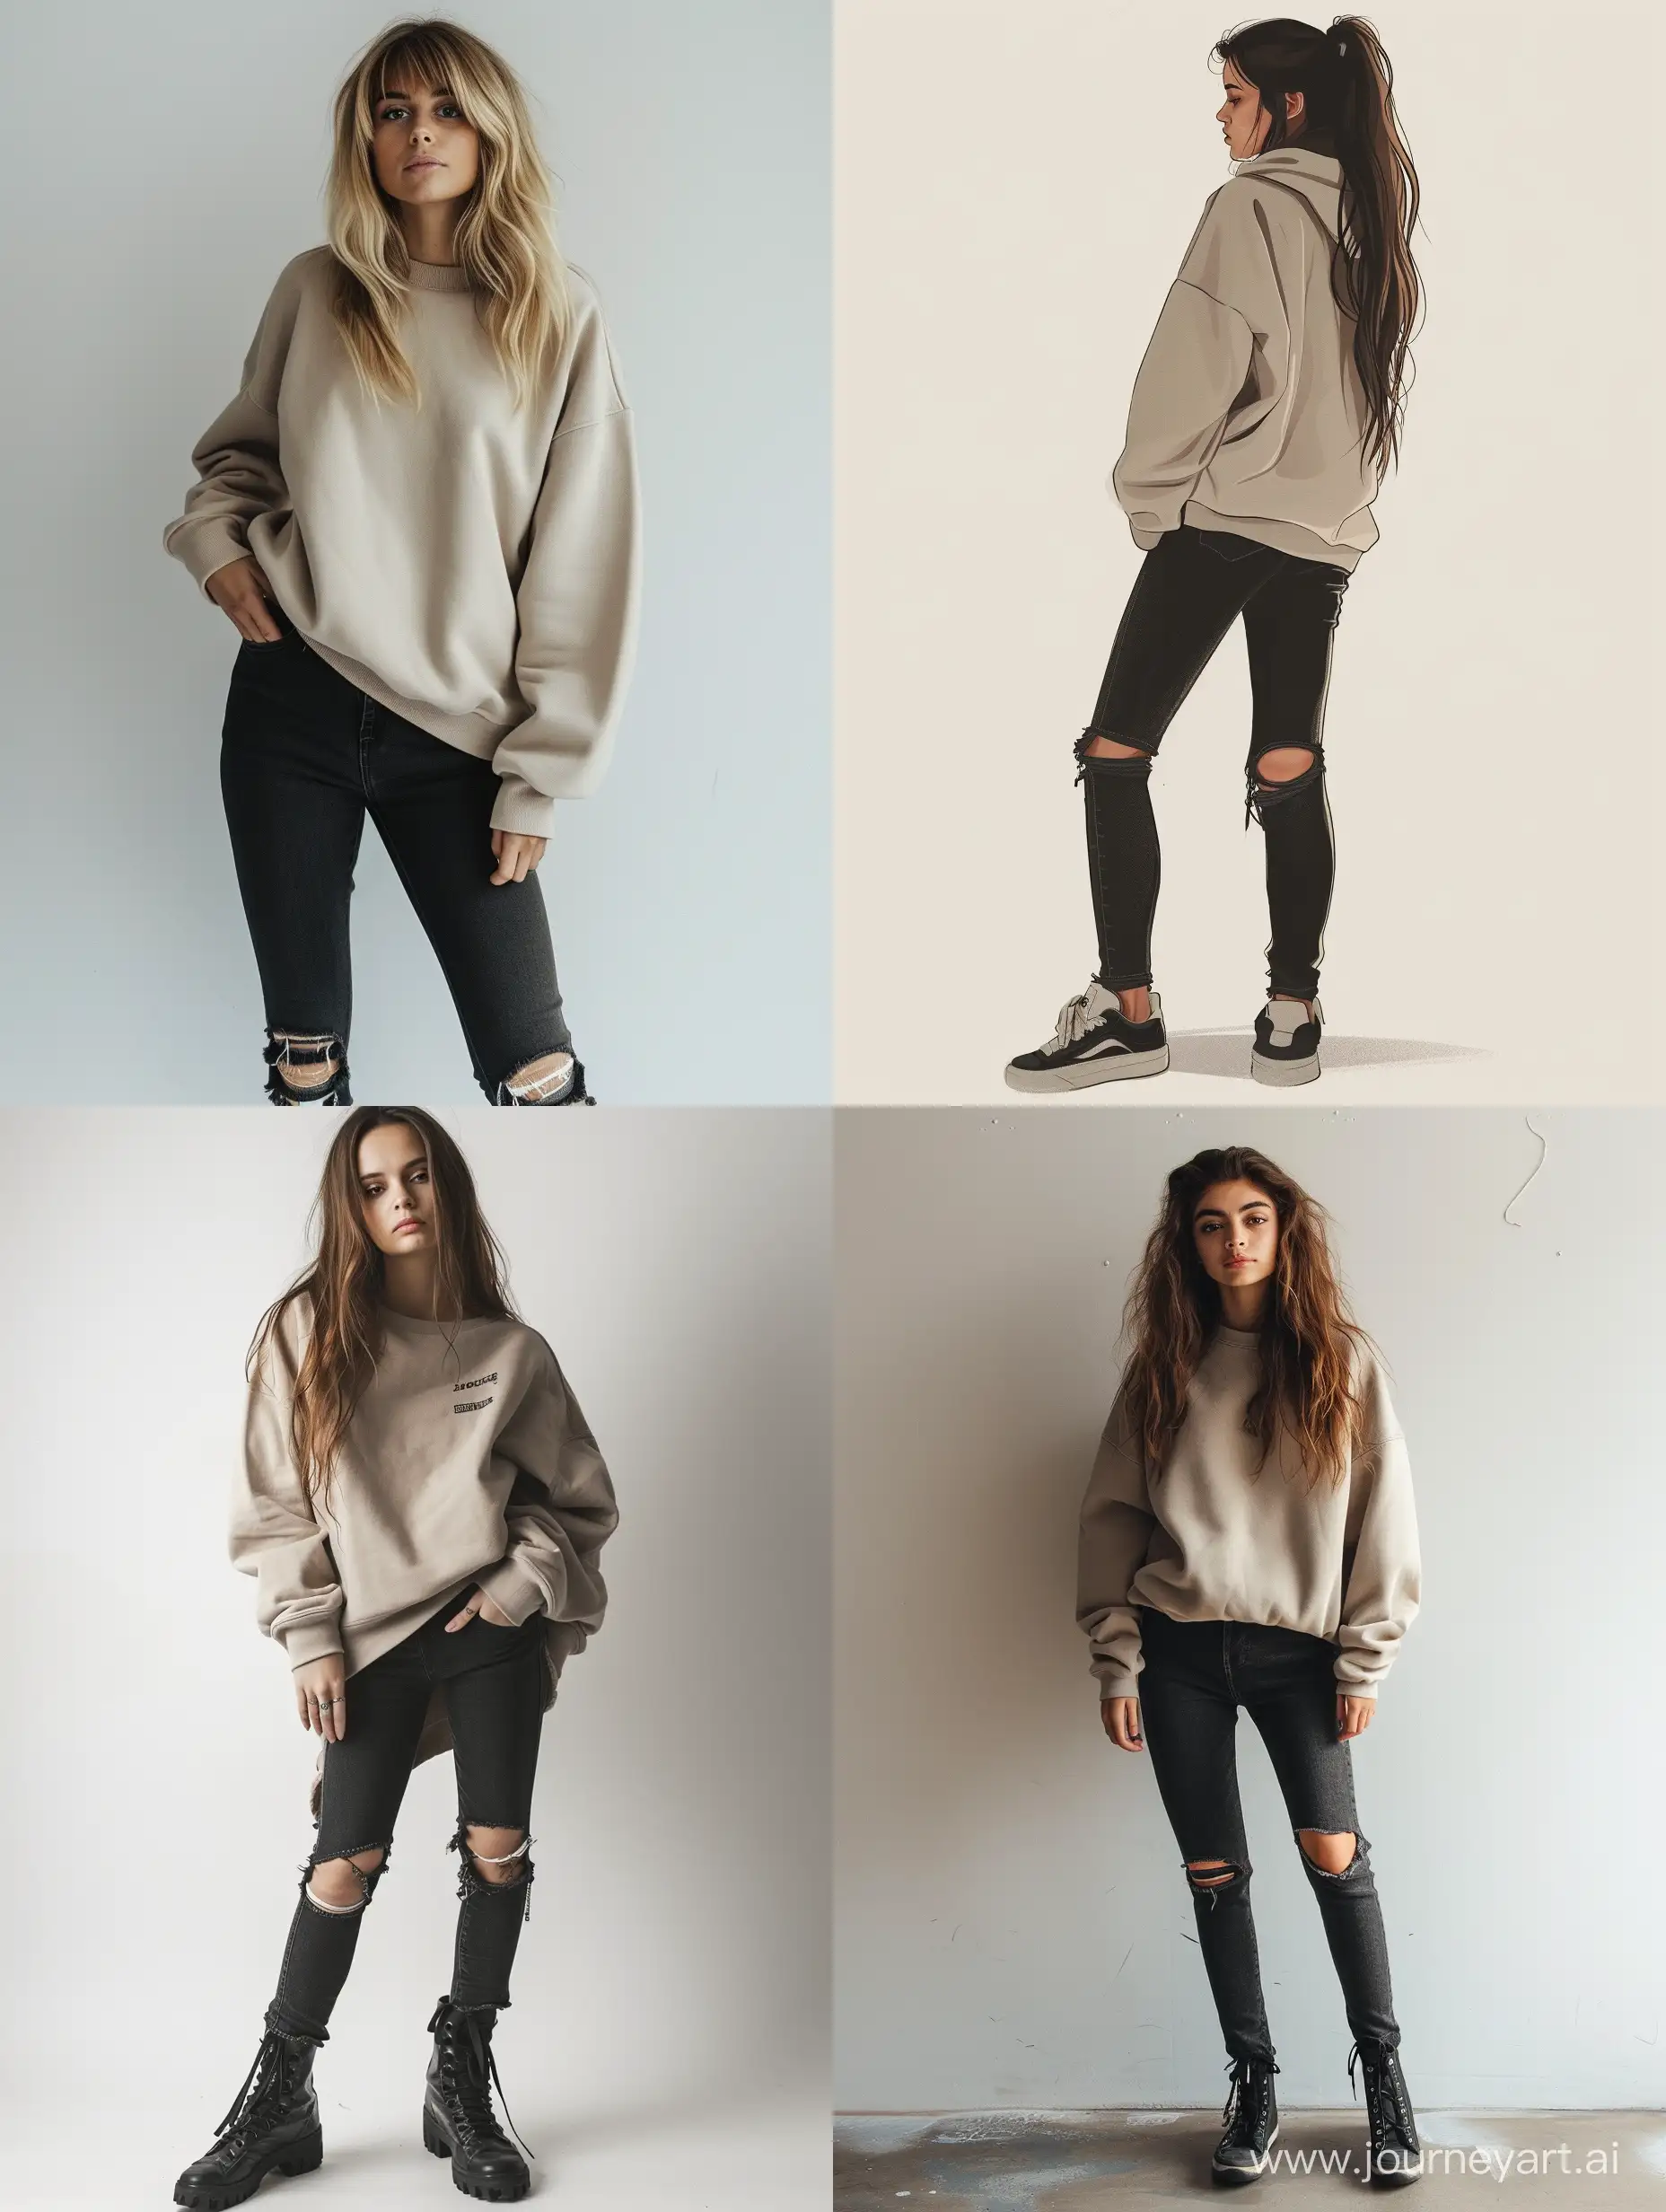 Casual-Teen-Girl-in-Beige-Sweatshirt-and-Black-Jeans-Standing-Tall